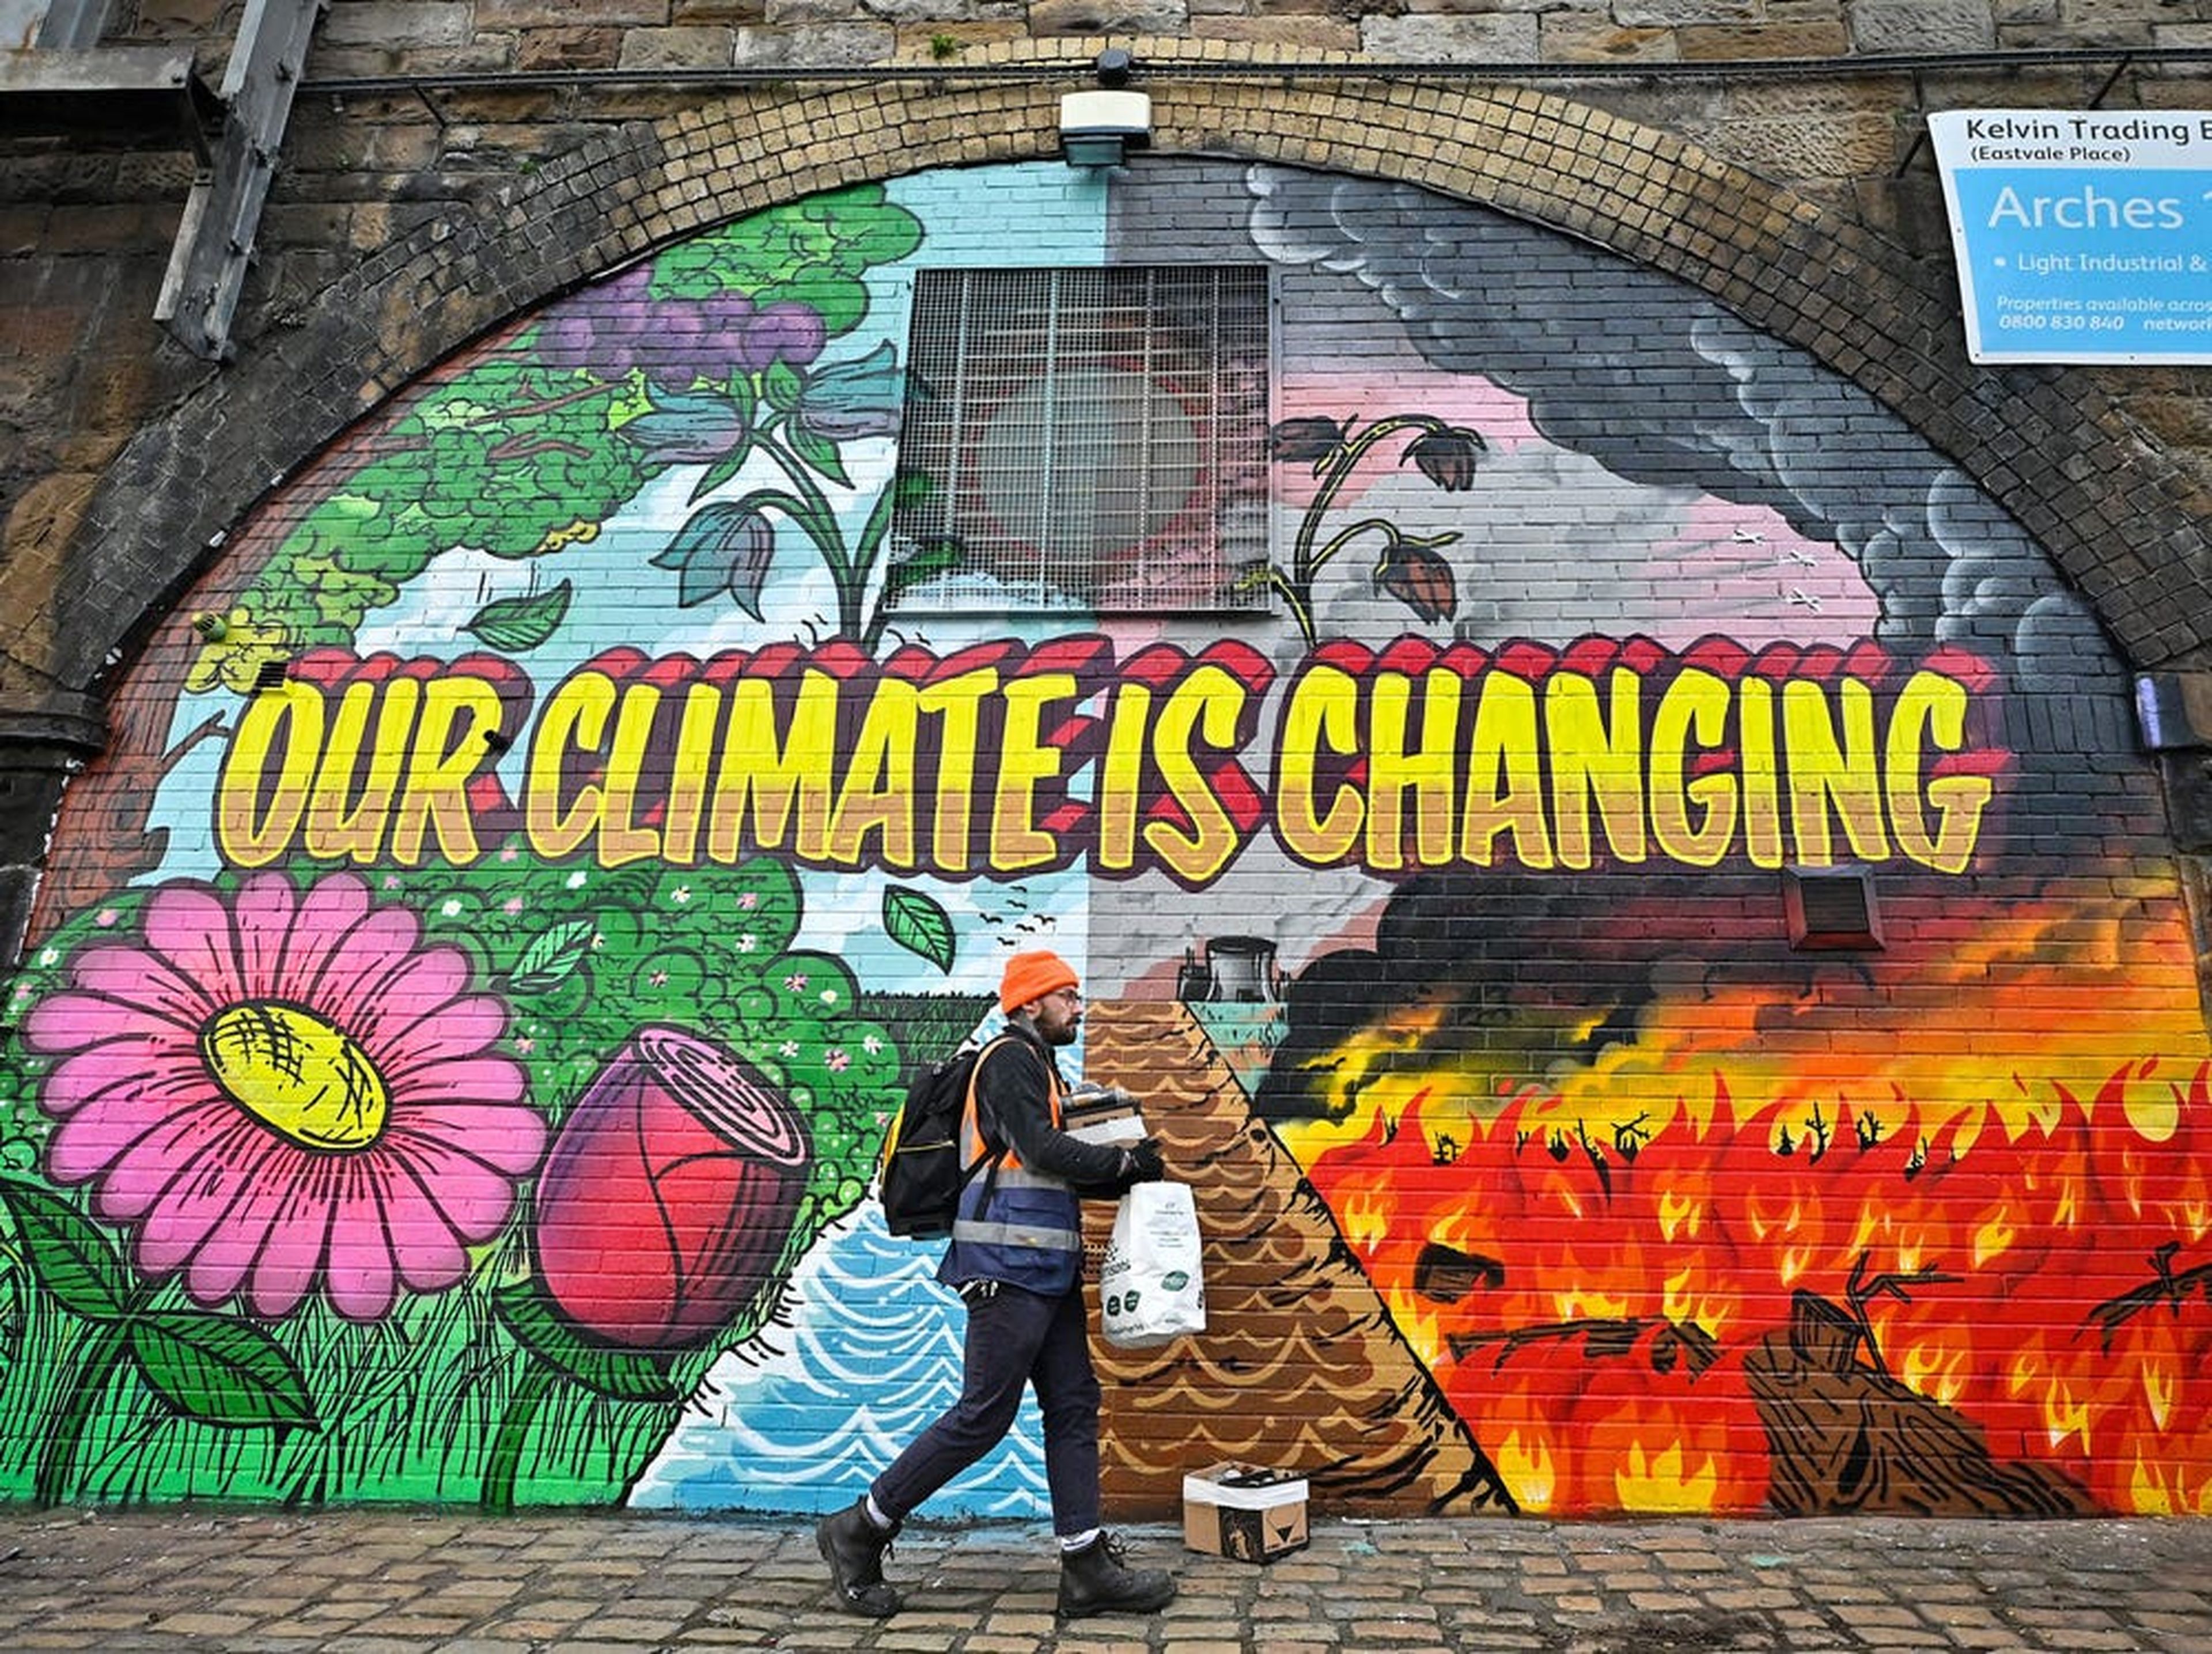 Imagen de un mural cerca del Scottish Events Centre de Glasgow, lugar donde se celebra la COP26.